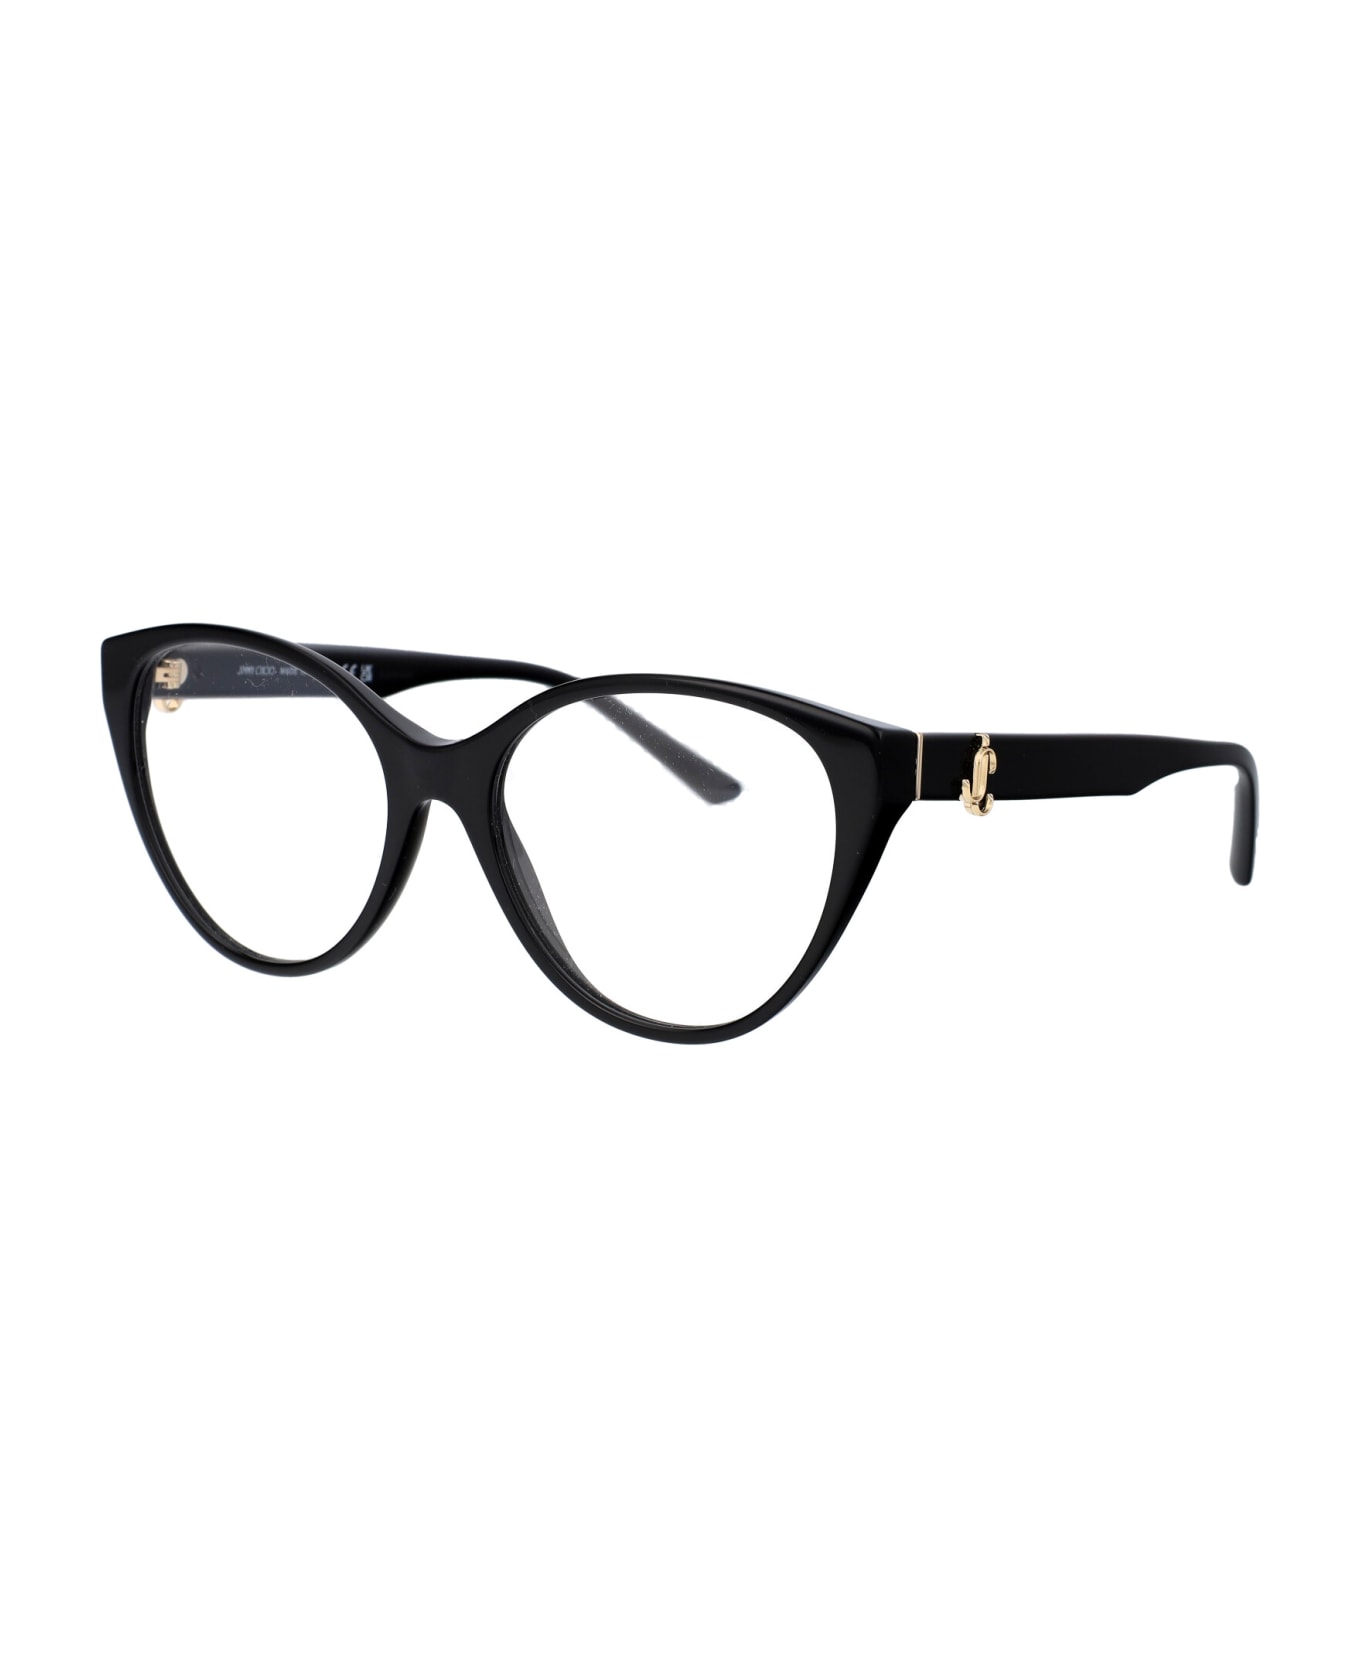 Jimmy Choo Eyewear 0jc3009 Glasses - 5000 Black